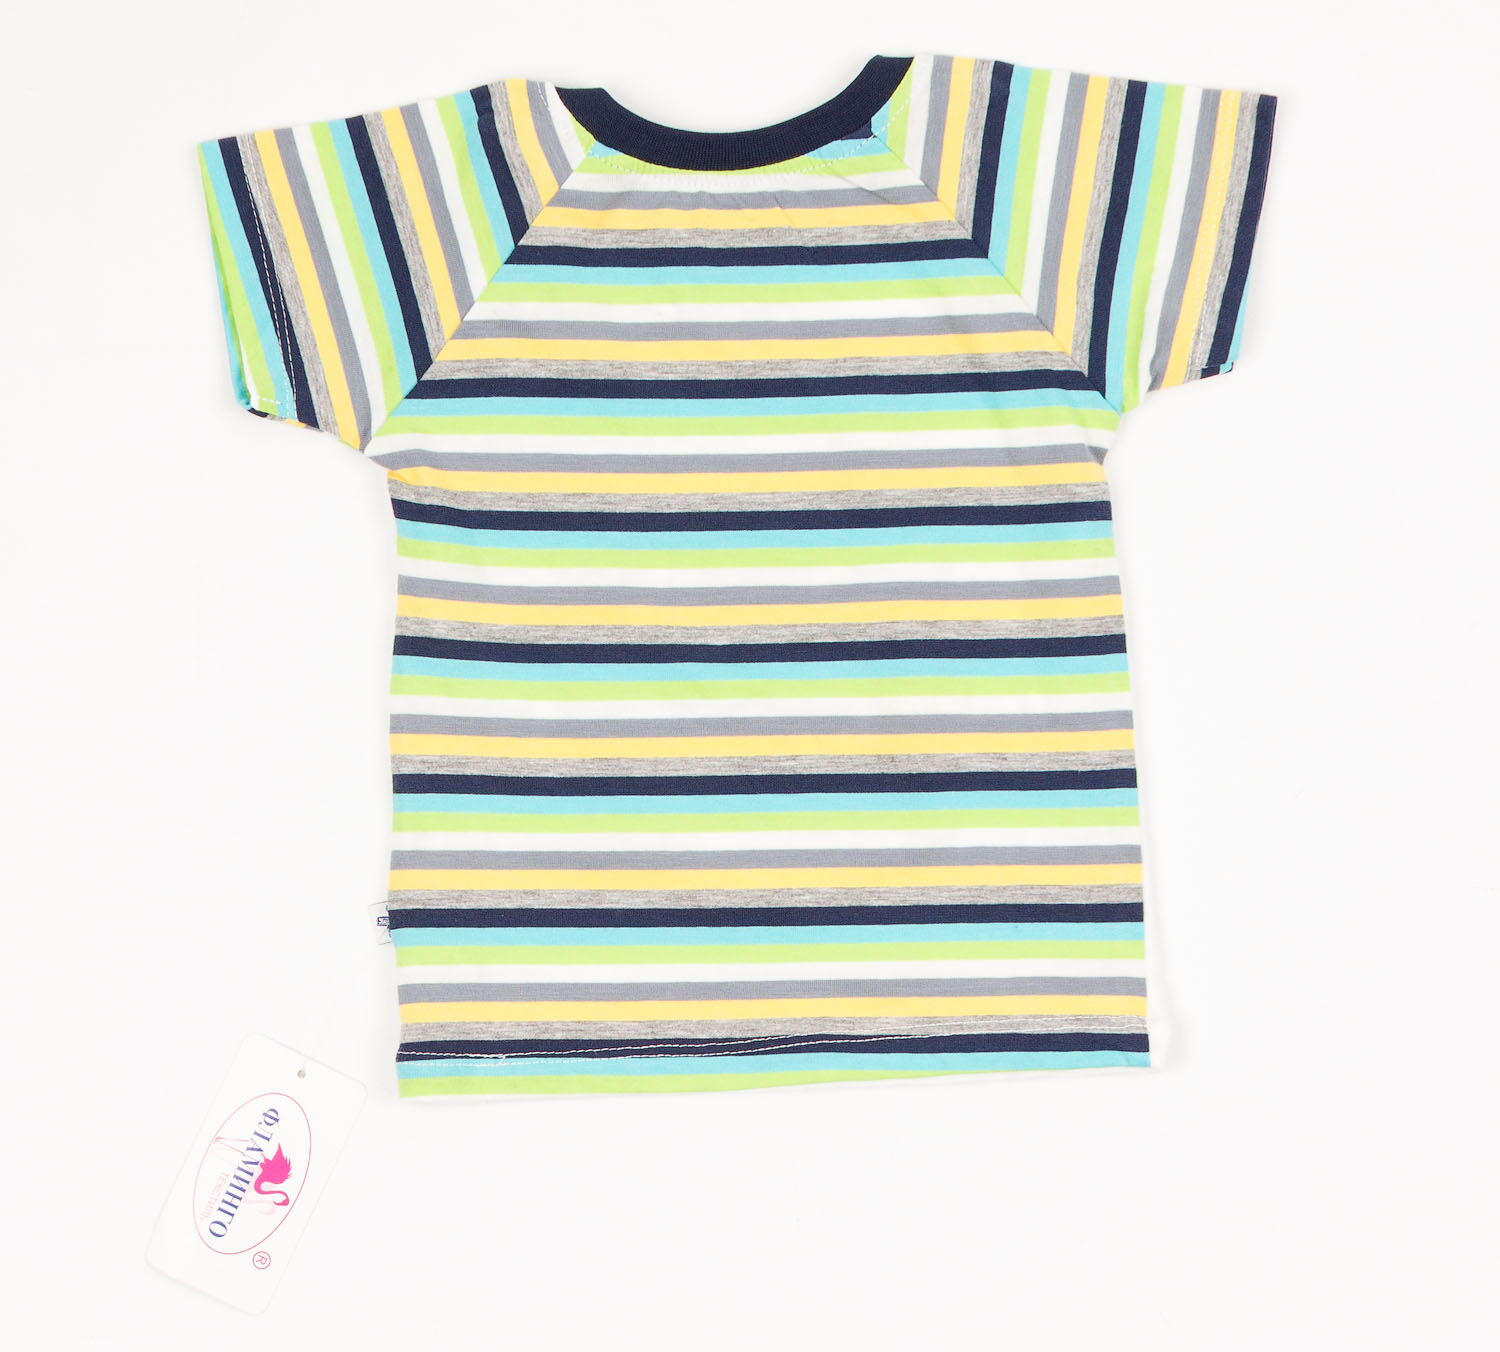 Комплект для мальчика (футболка+шорты) Фламинго темно-синий 587-129 - фотография